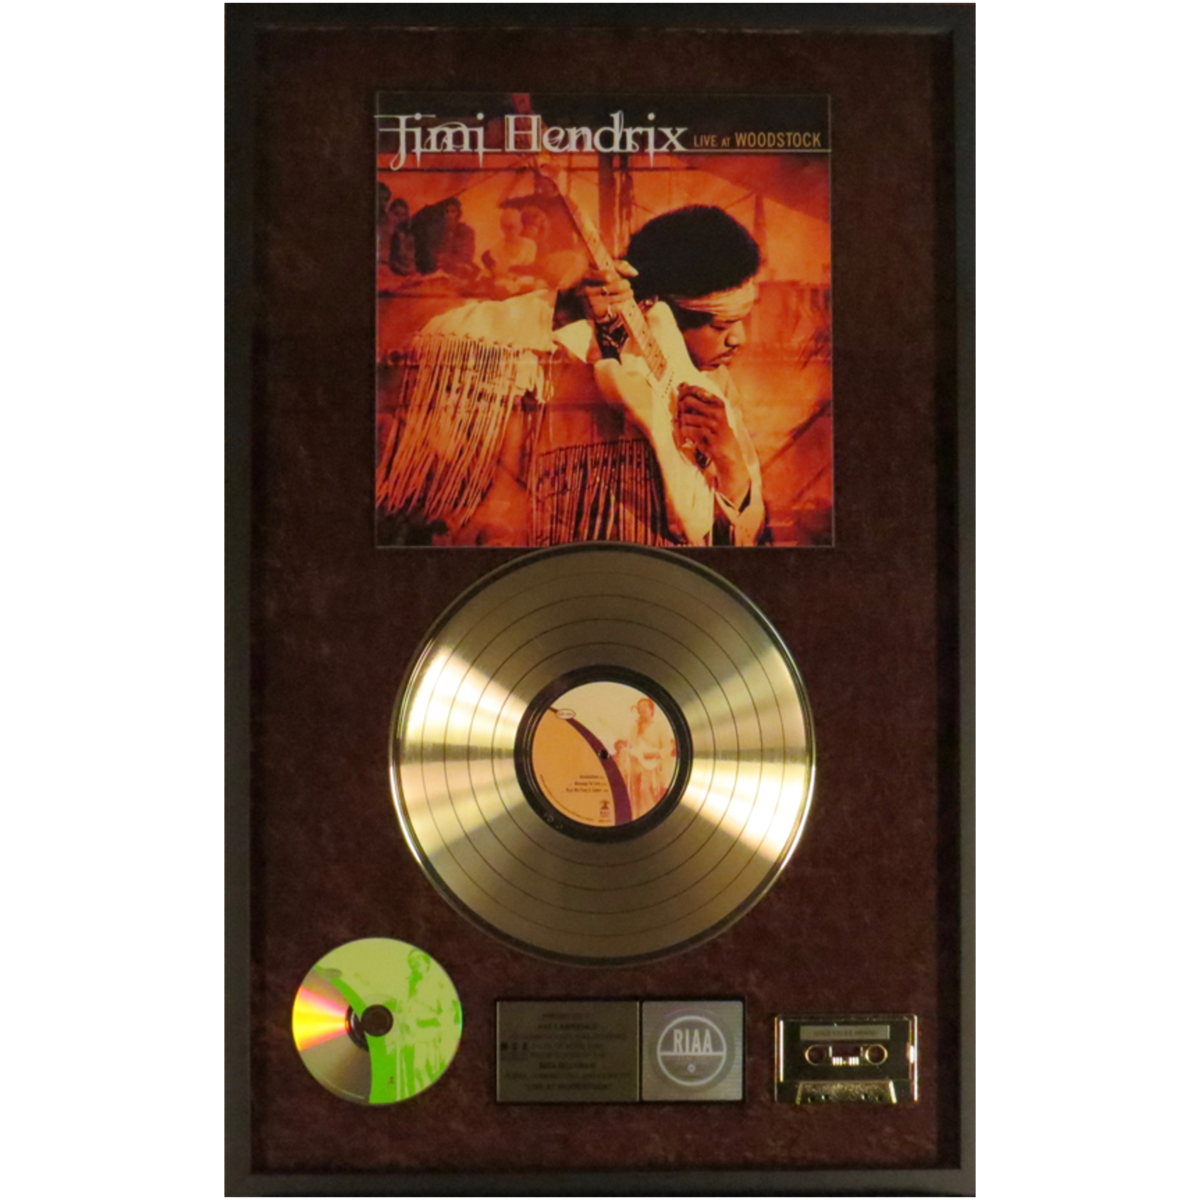 Live at Woodstock RIAA Gold Award